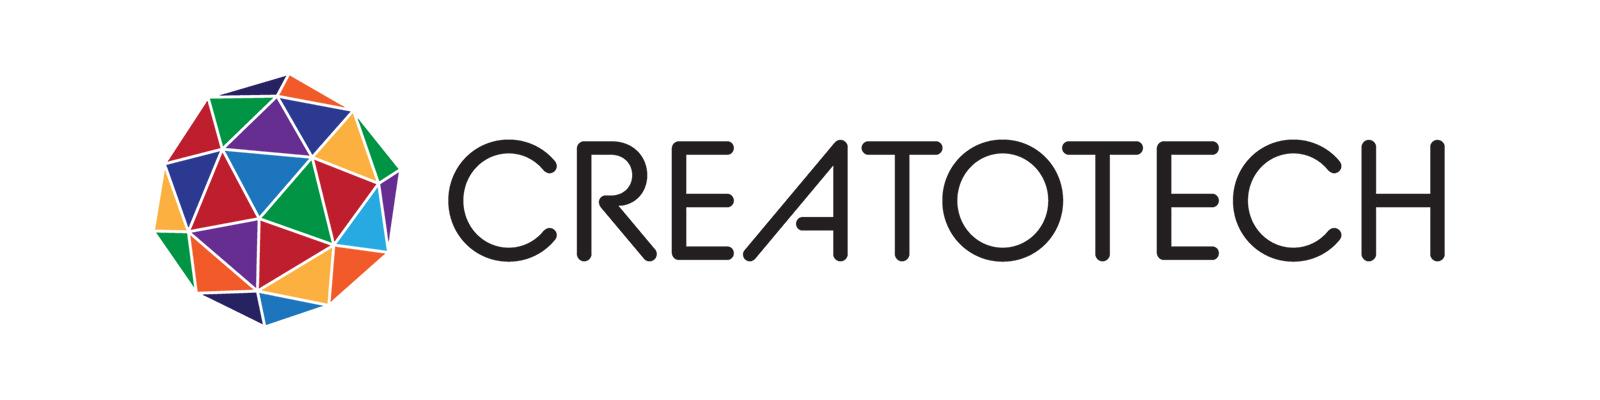 creatotech logo - MPENTA